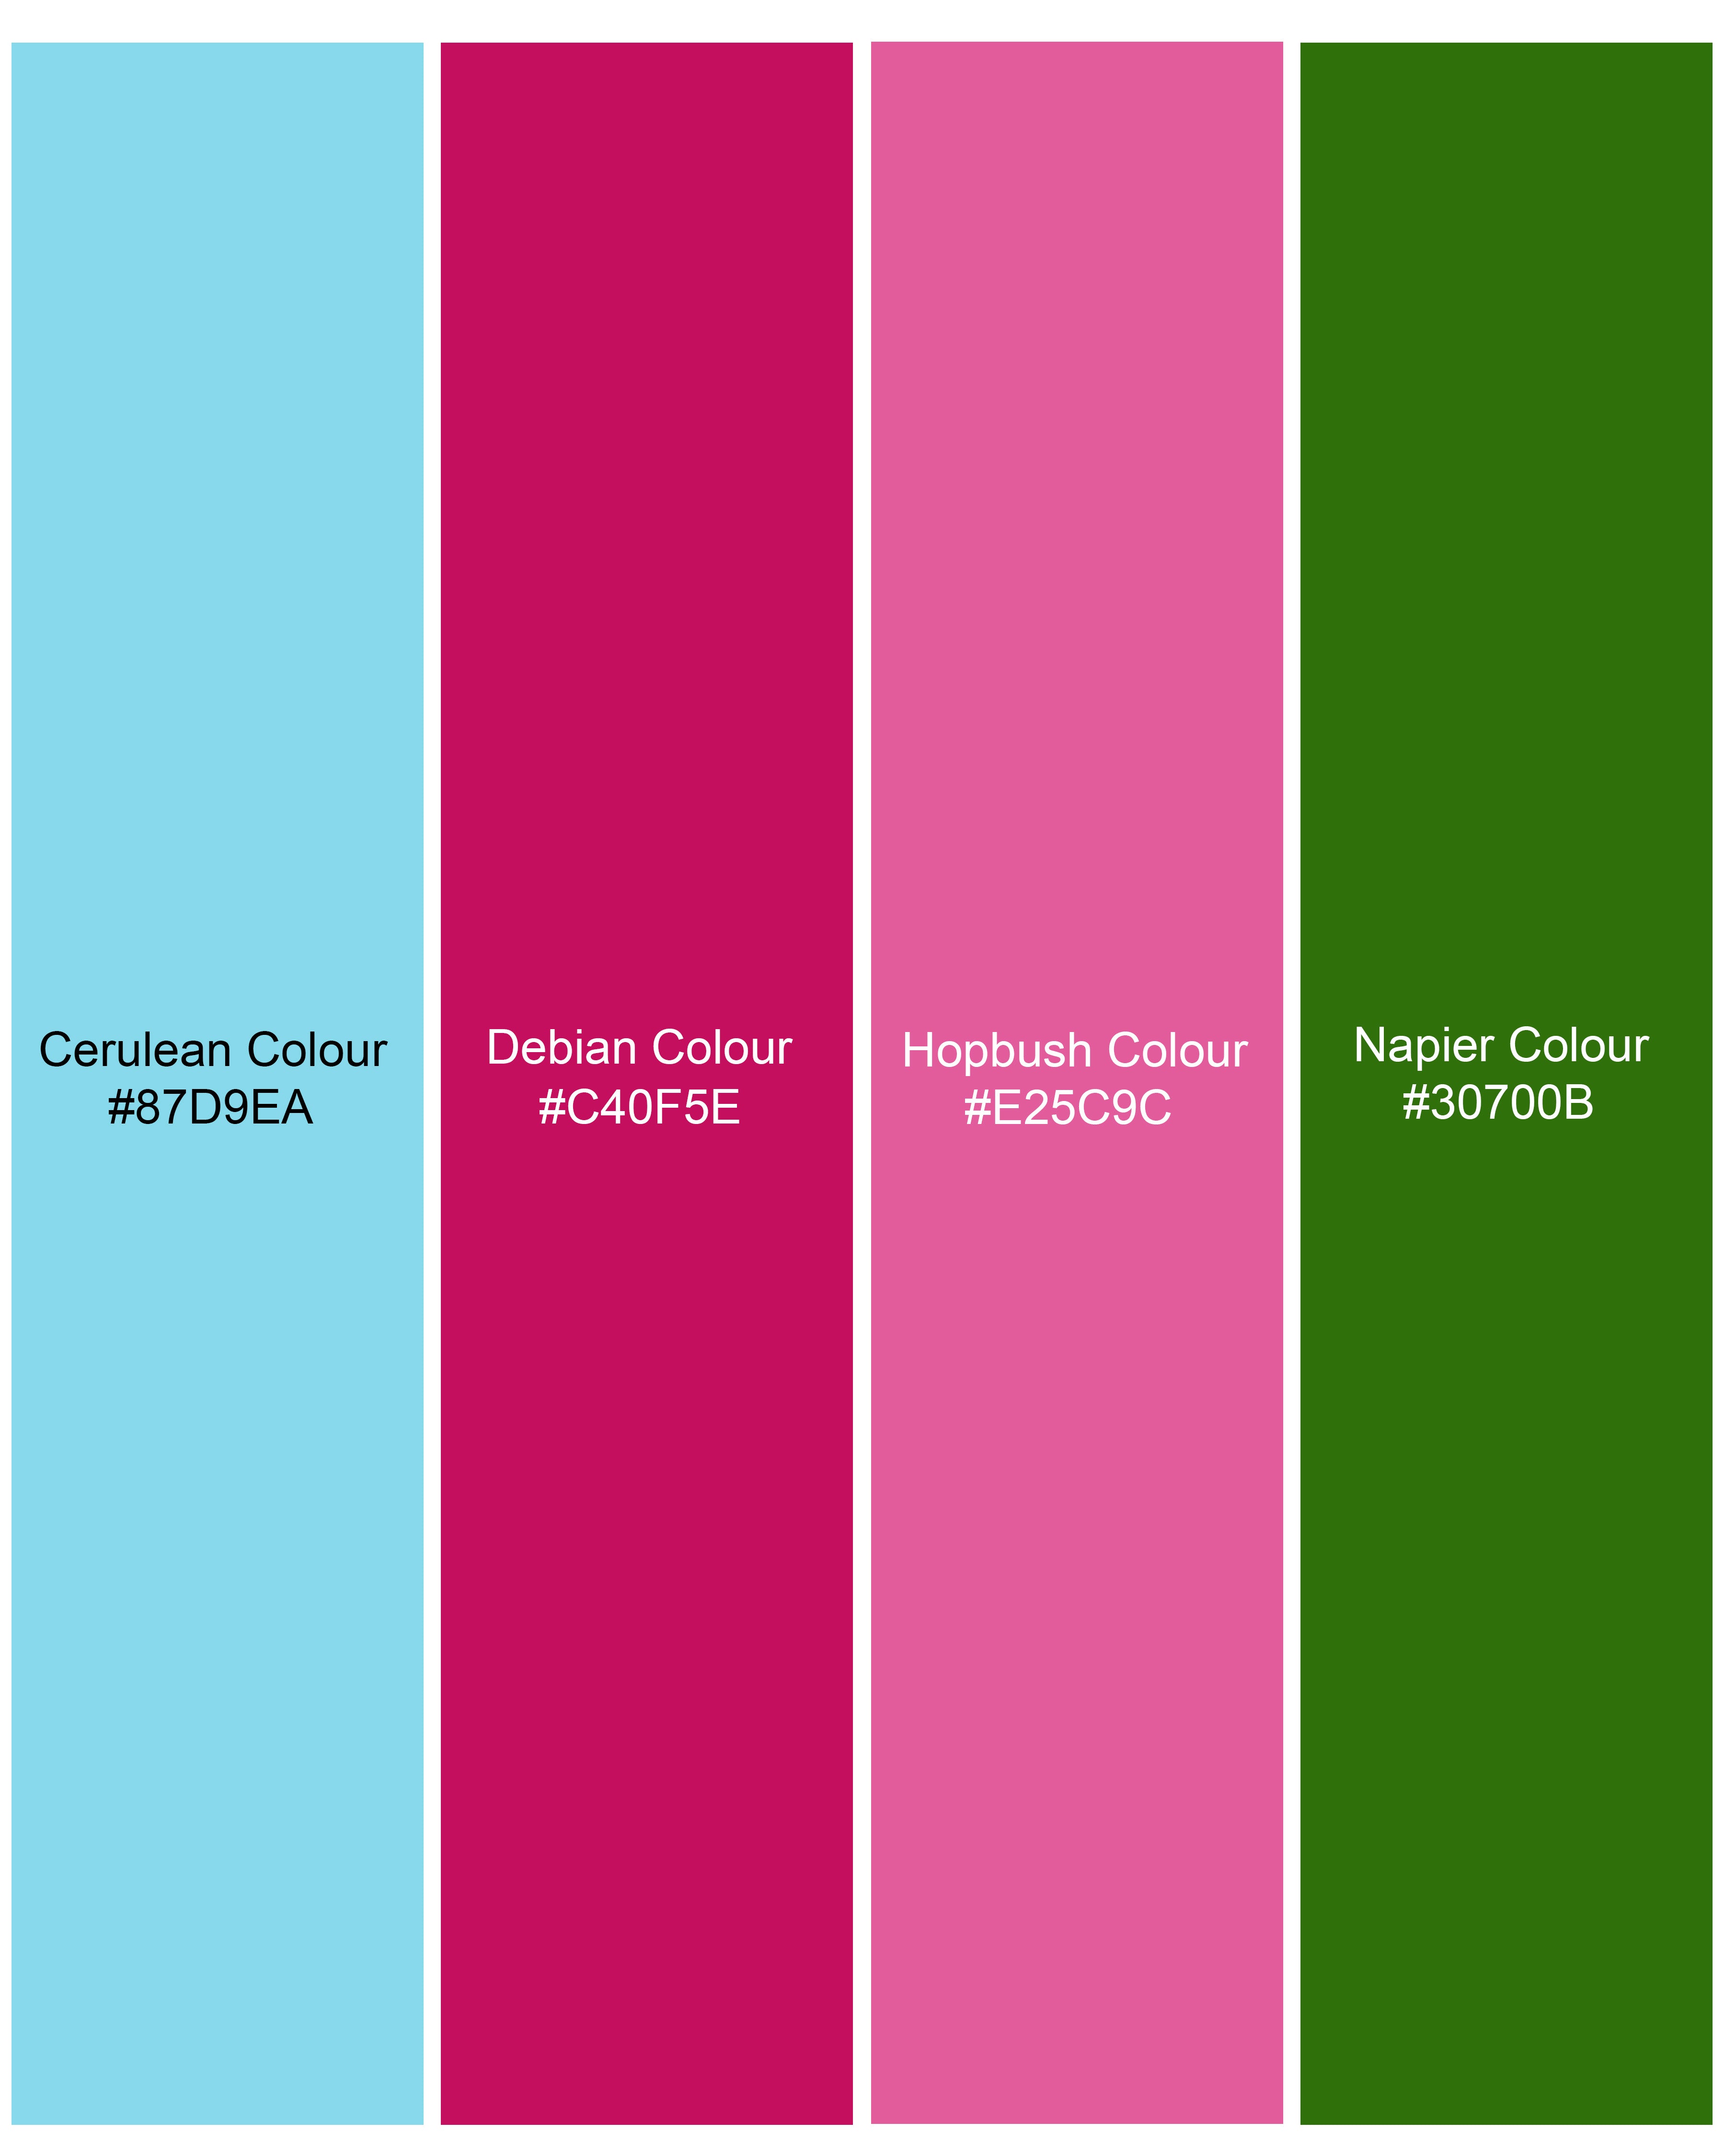 Cerulean Blue Rose Printed Premium Cotton Jumpsuit WD006-32, WD006-34, WD006-36, WD006-38, WD006-40, WD006-42